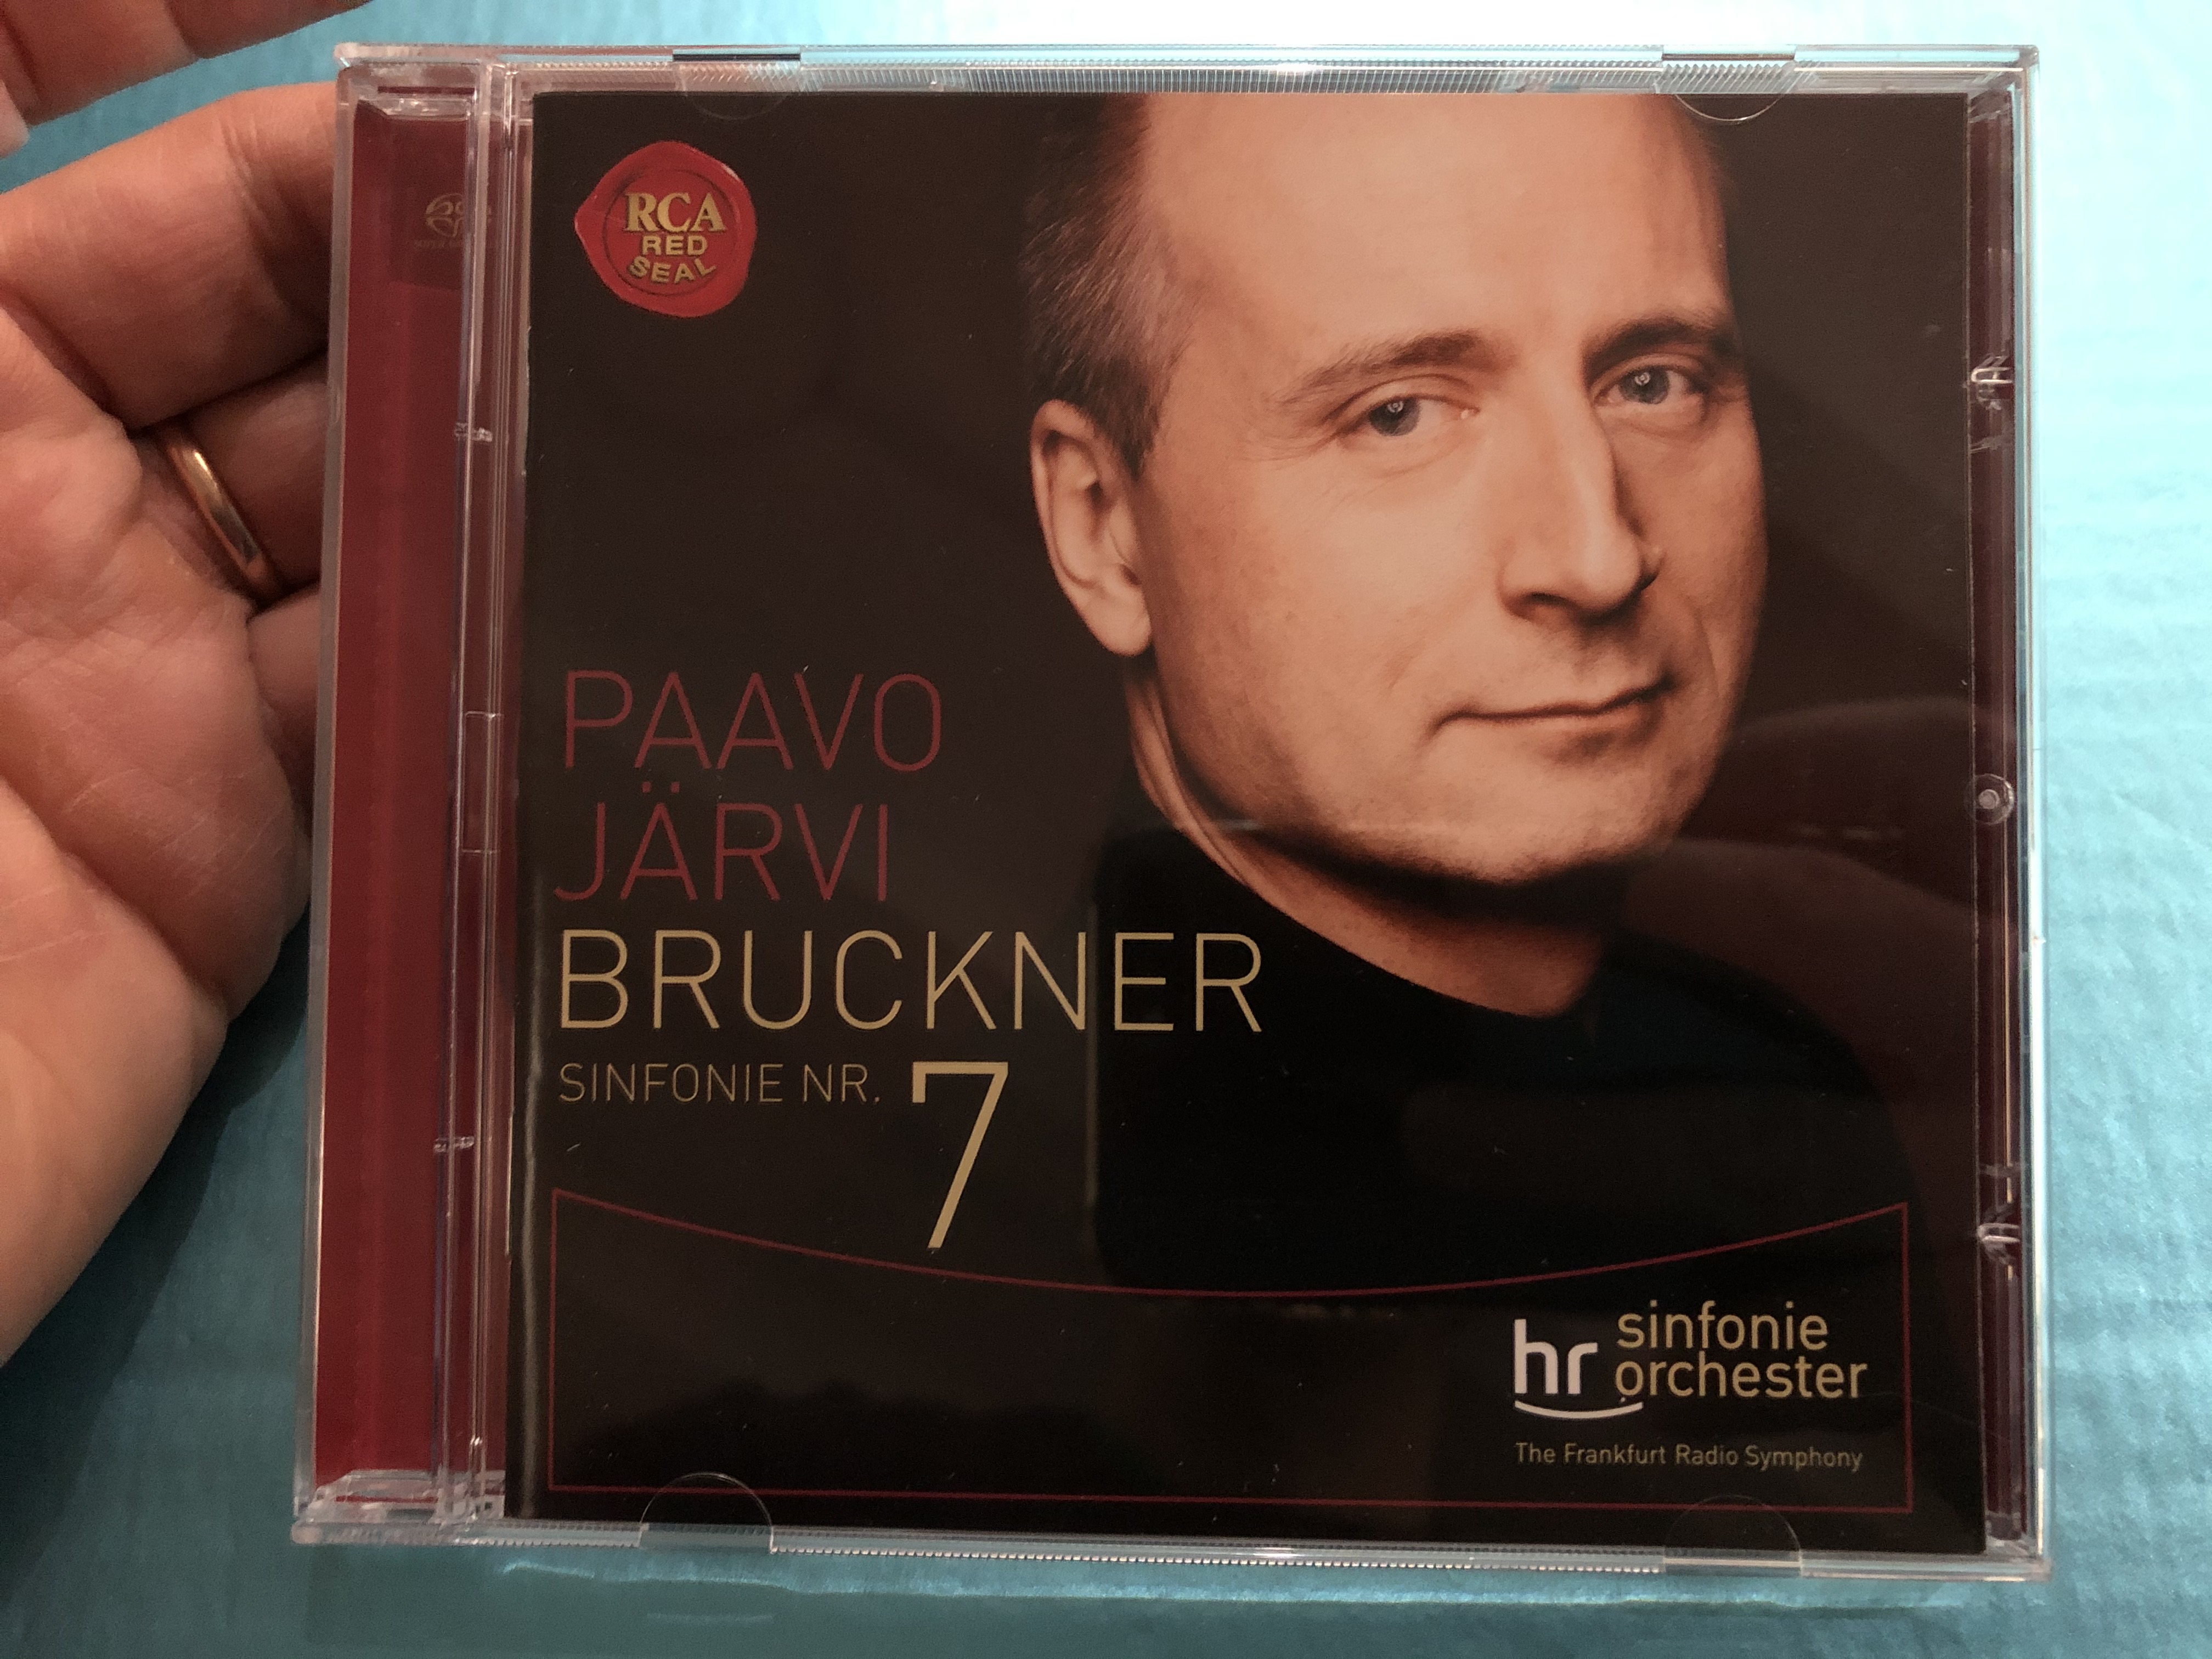 paavo-j-rvi-bruckner-sinfonie-nr.-7-hr-sinfonieorchester-the-frankfurt-radio-symphony-rca-red-seal-audio-cd-2008-88697389972-1-.jpg